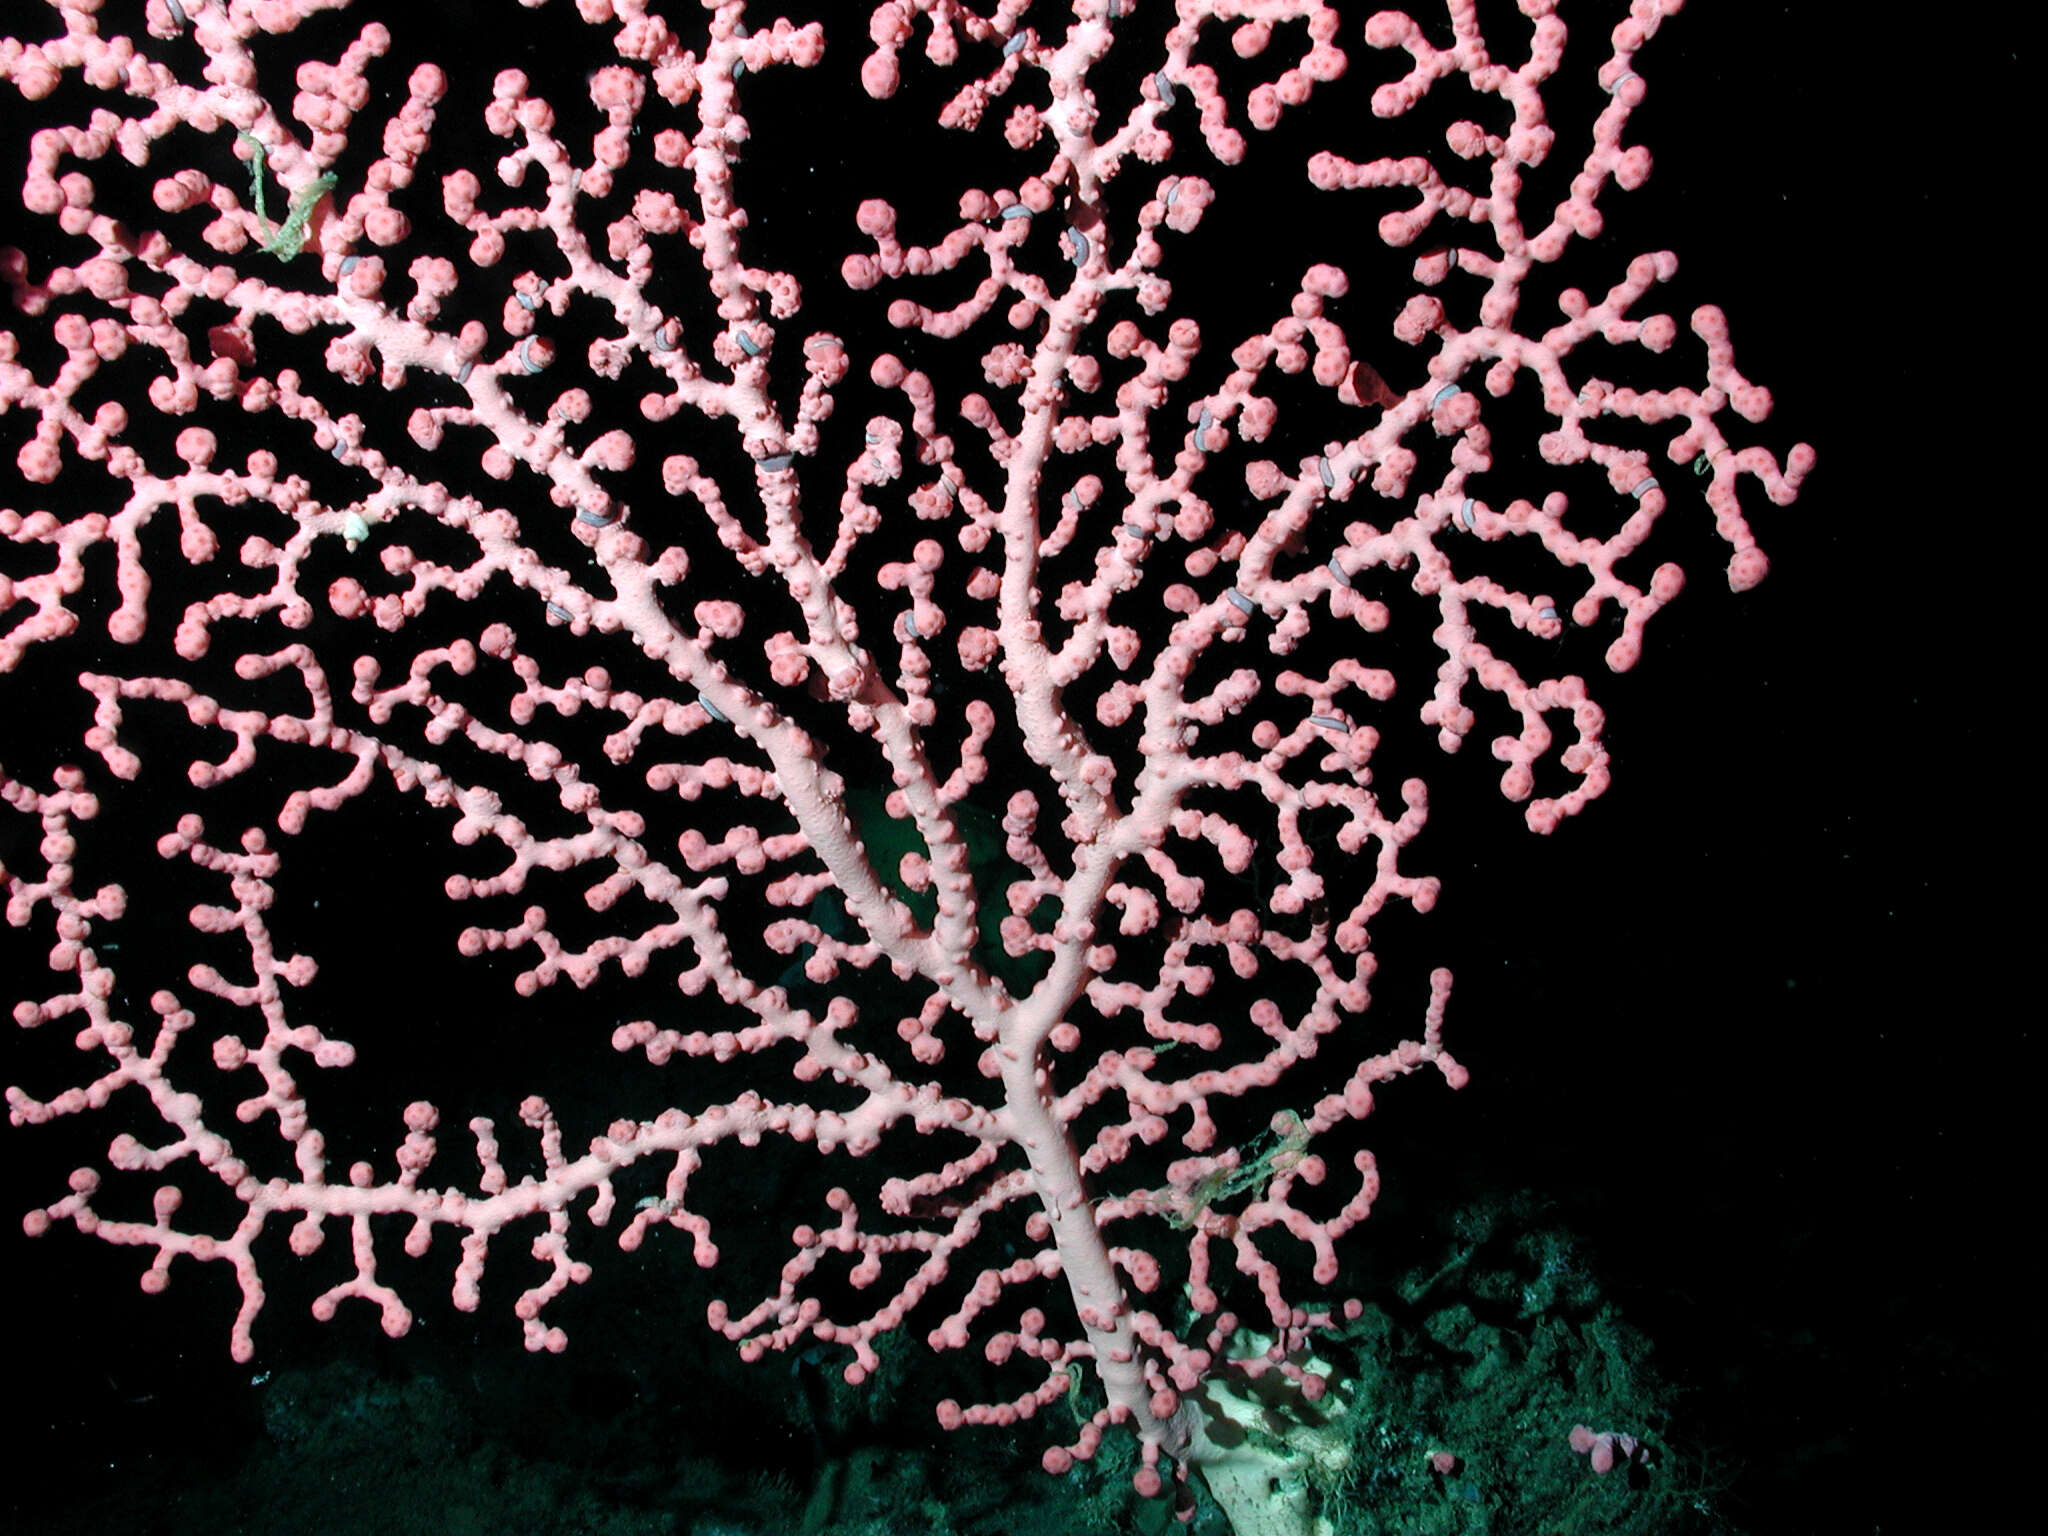 Image of Bubblegum coral